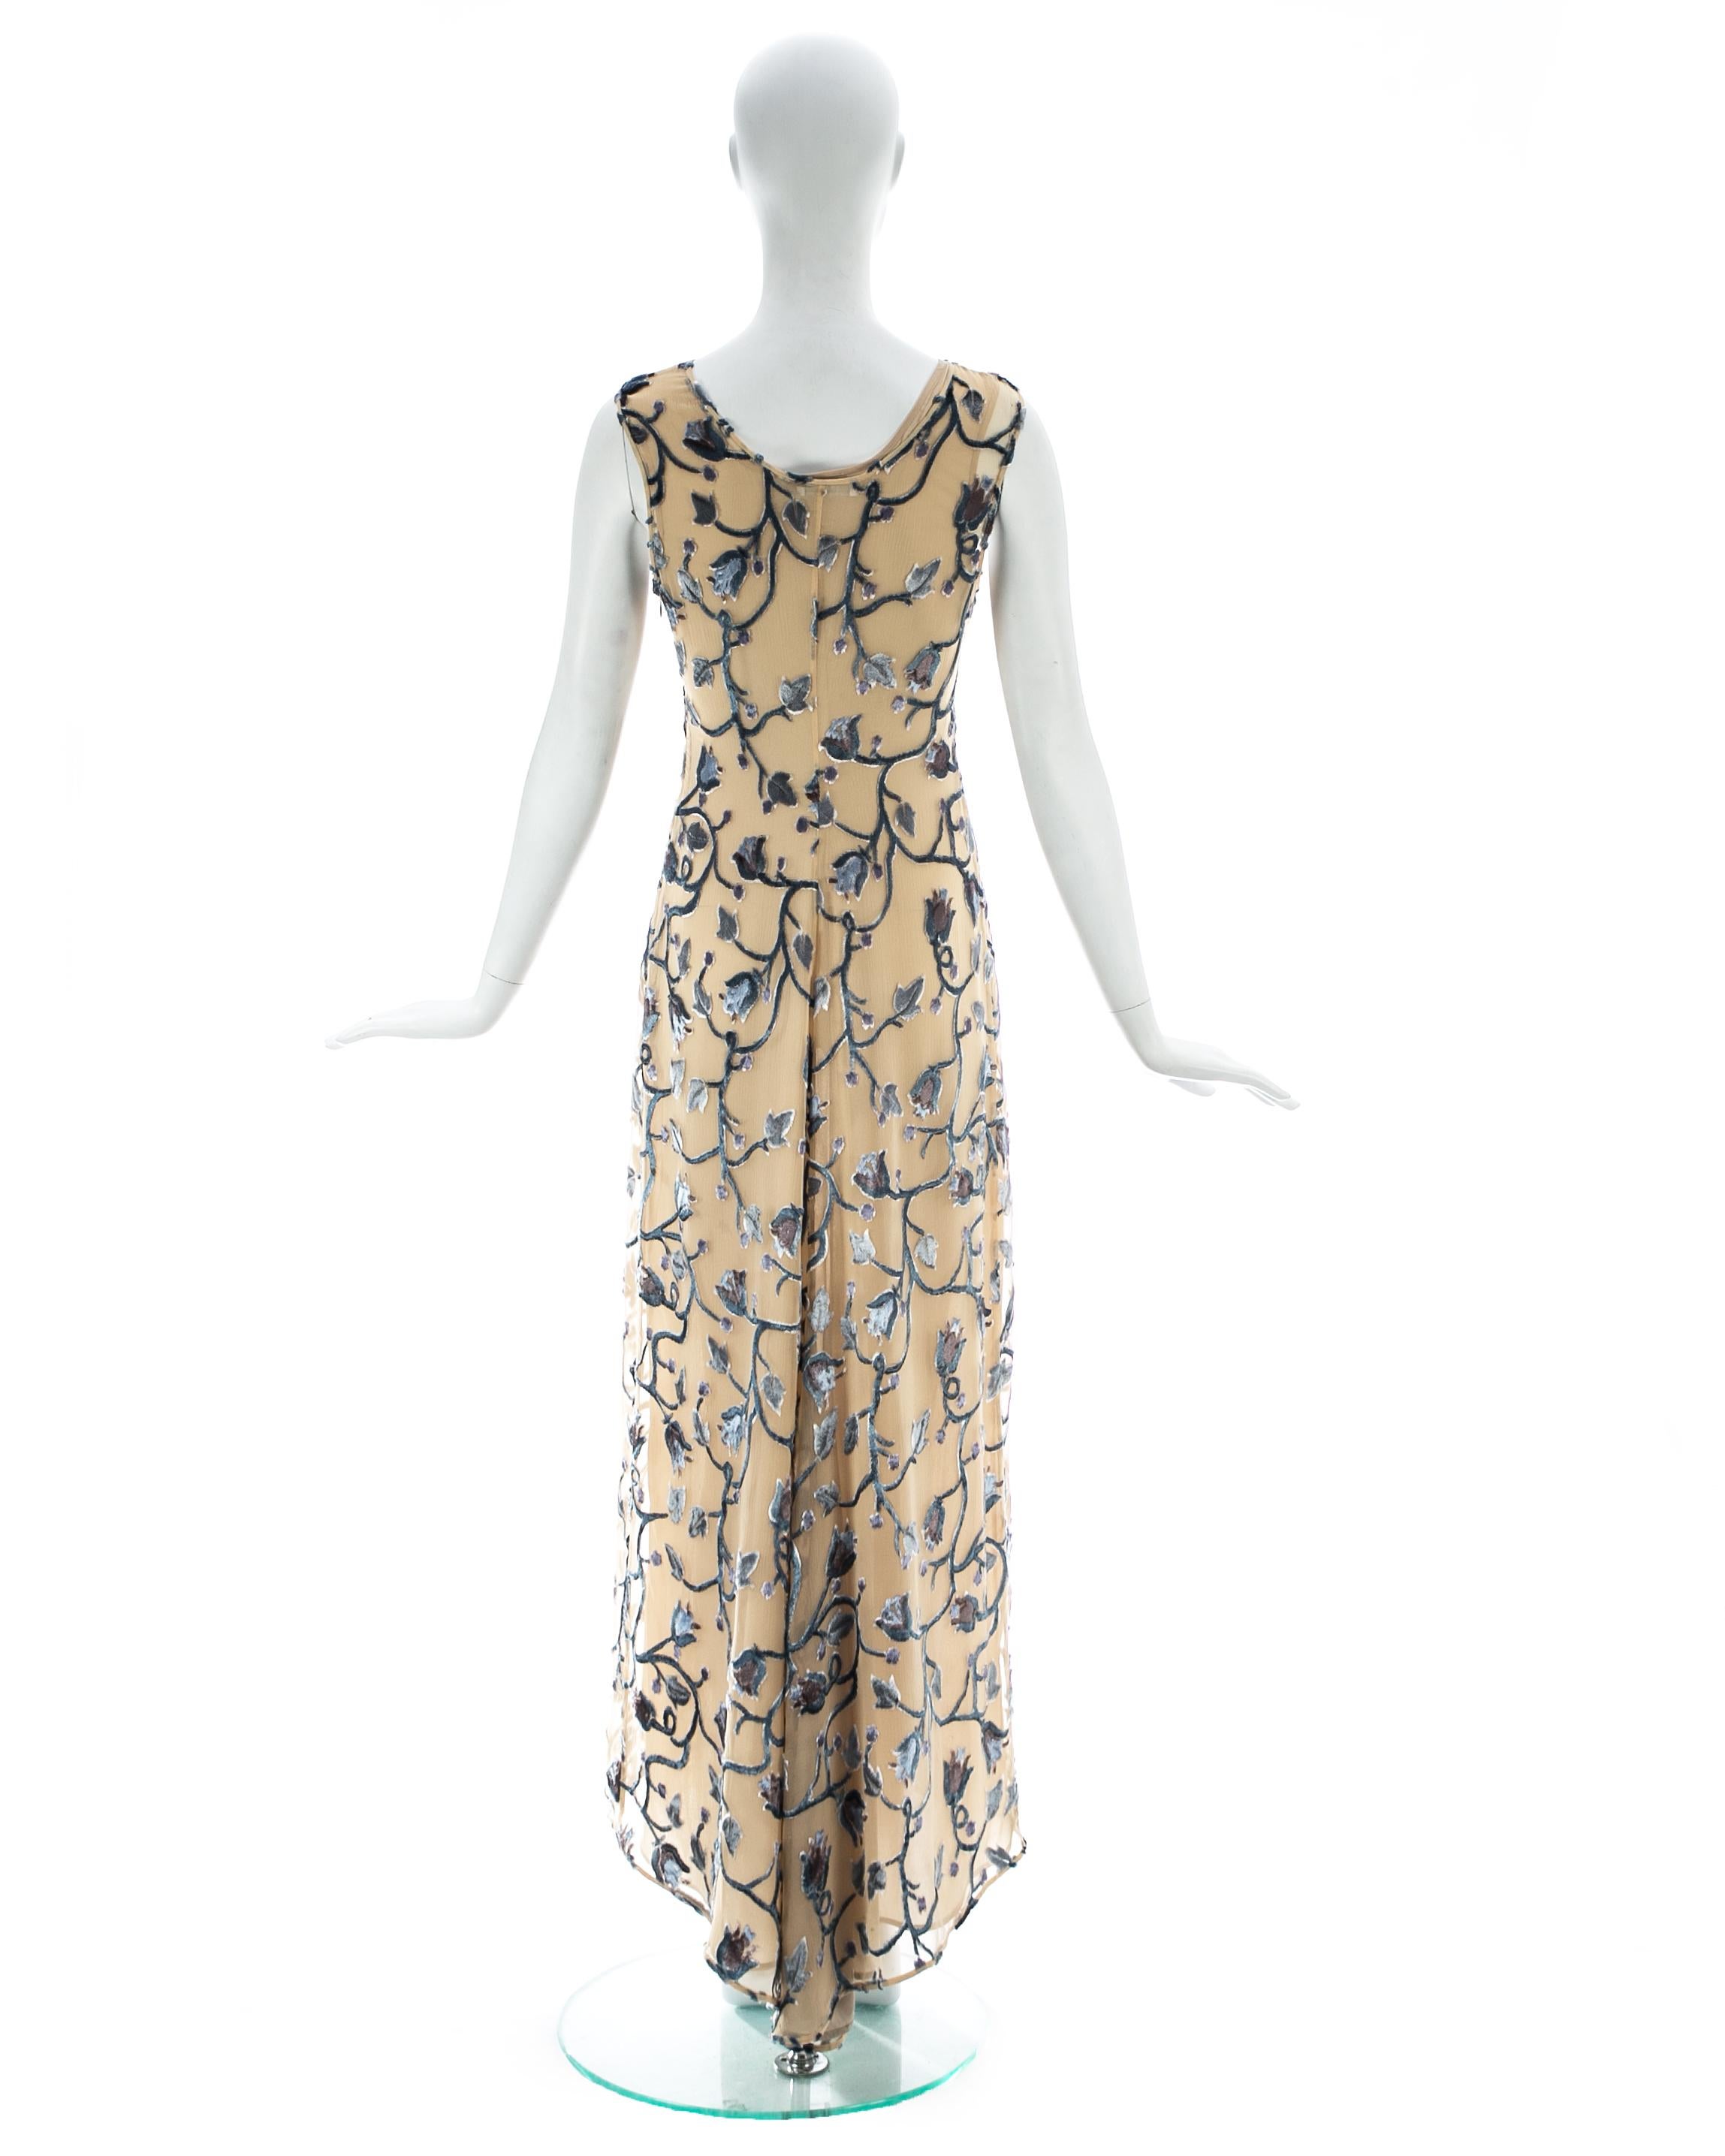 Prada ivory silk devoré floral maxi dress with train and slip dress, ss 1997 2